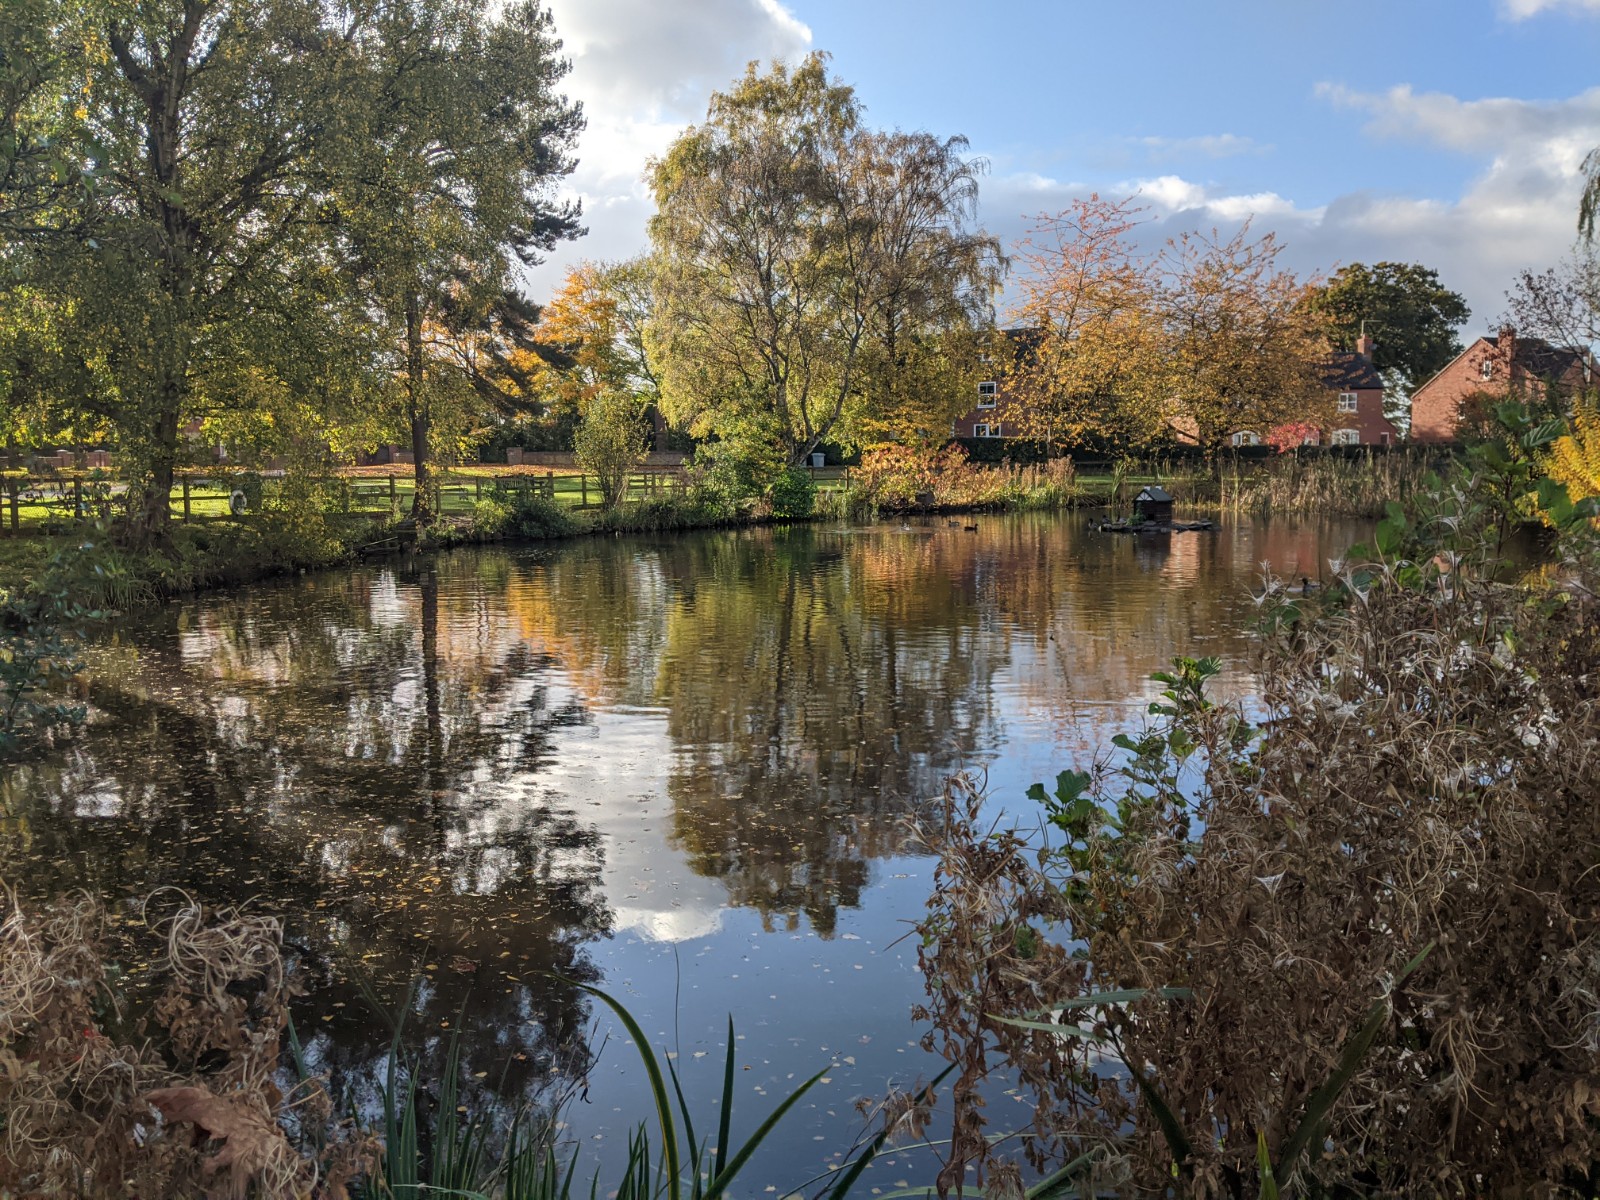 The village pond, October 26th